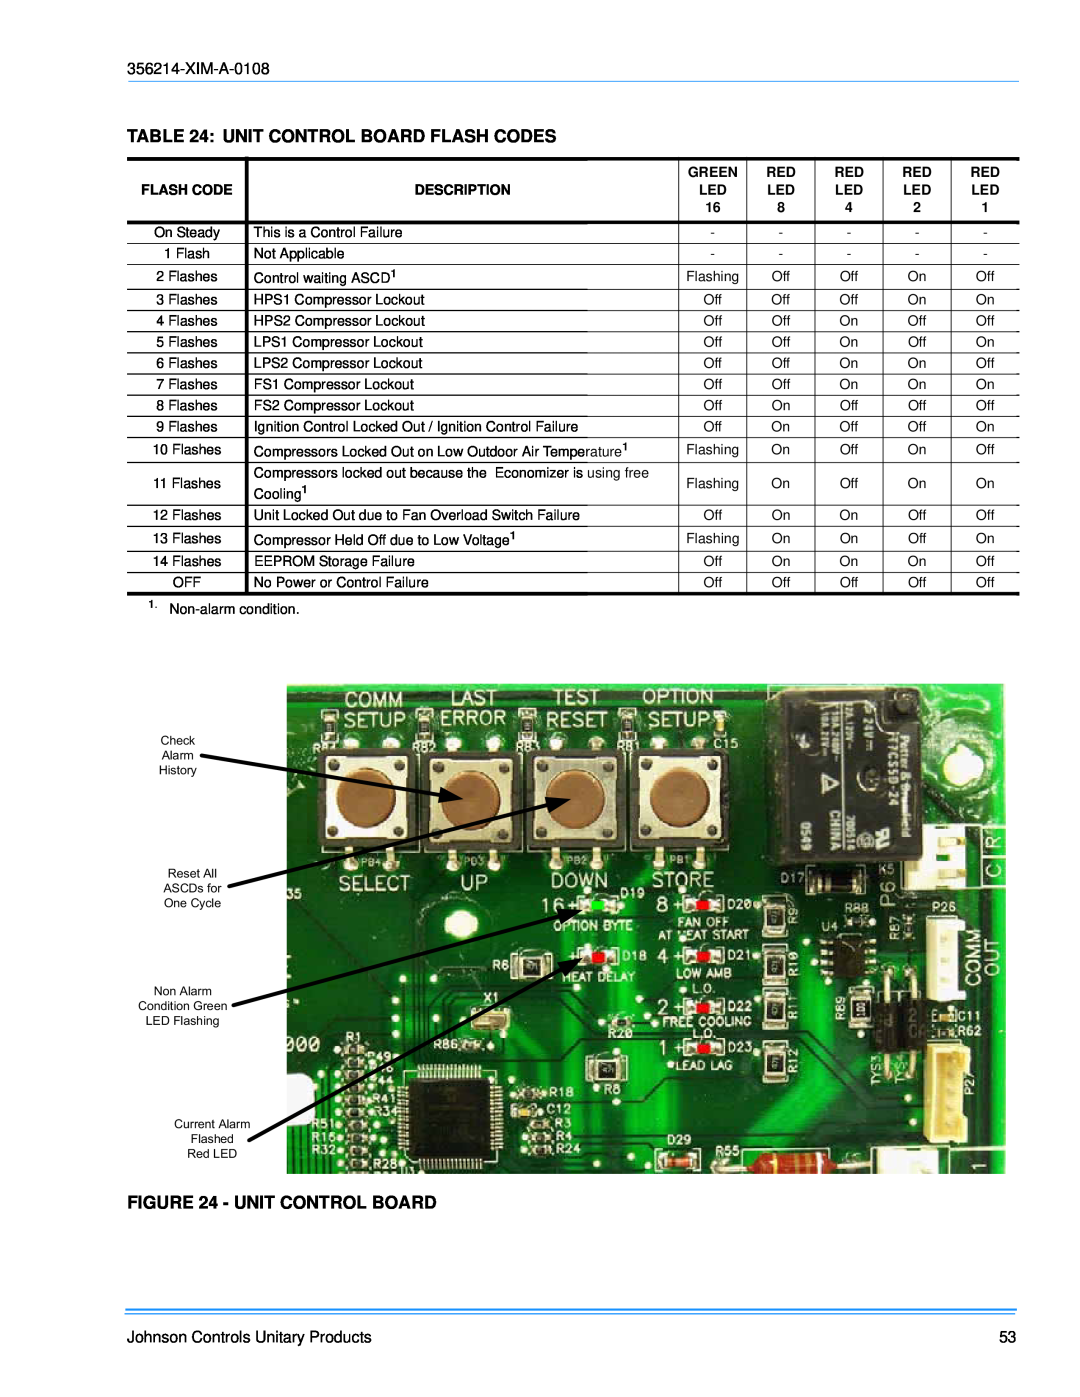 Sunlife Enterprises DM180, DM300, DM240 Unit Control Board Flash Codes, XIM-A-0108, Johnson Controls Unitary Products 